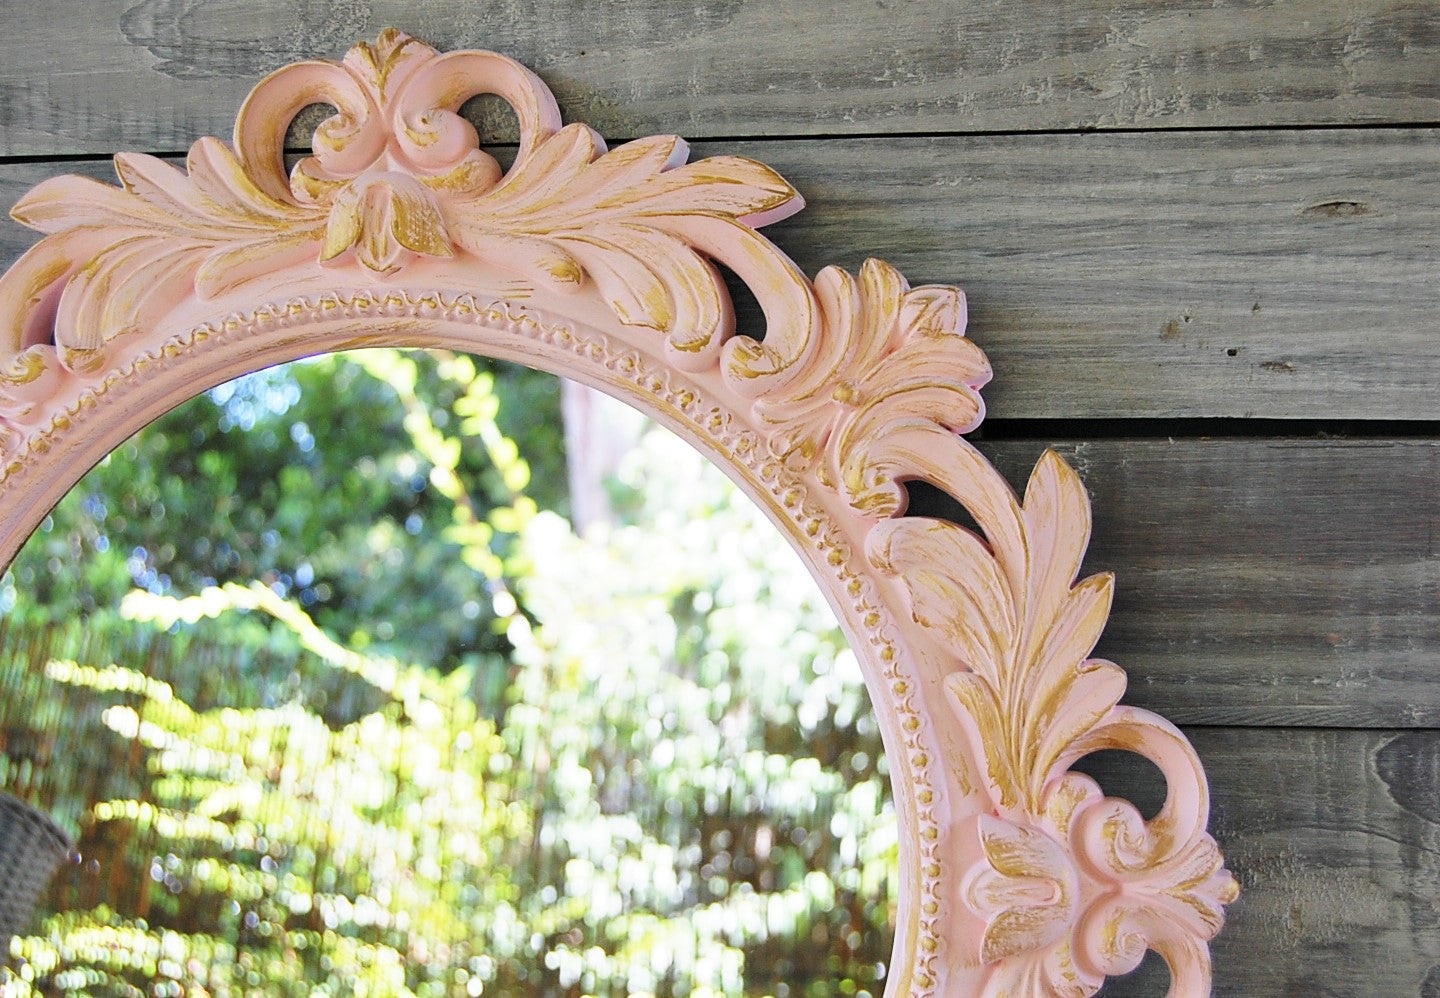 Pink shabby chic mirror